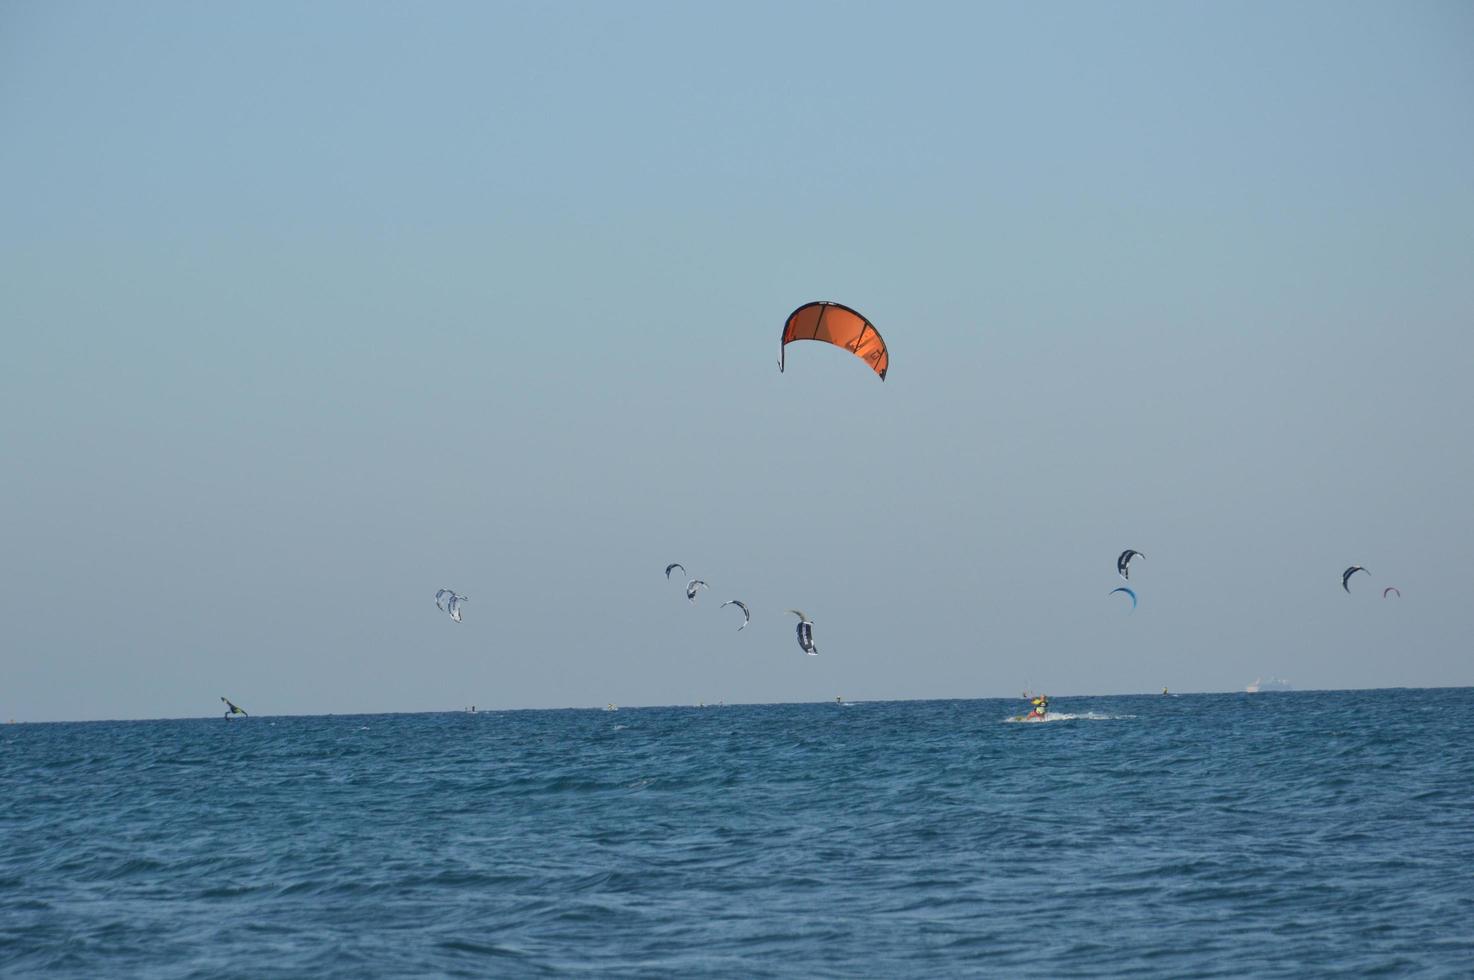 theologos, rhodos, grèce - 16 septembre 2021 kitesurf dans la mer égée photo